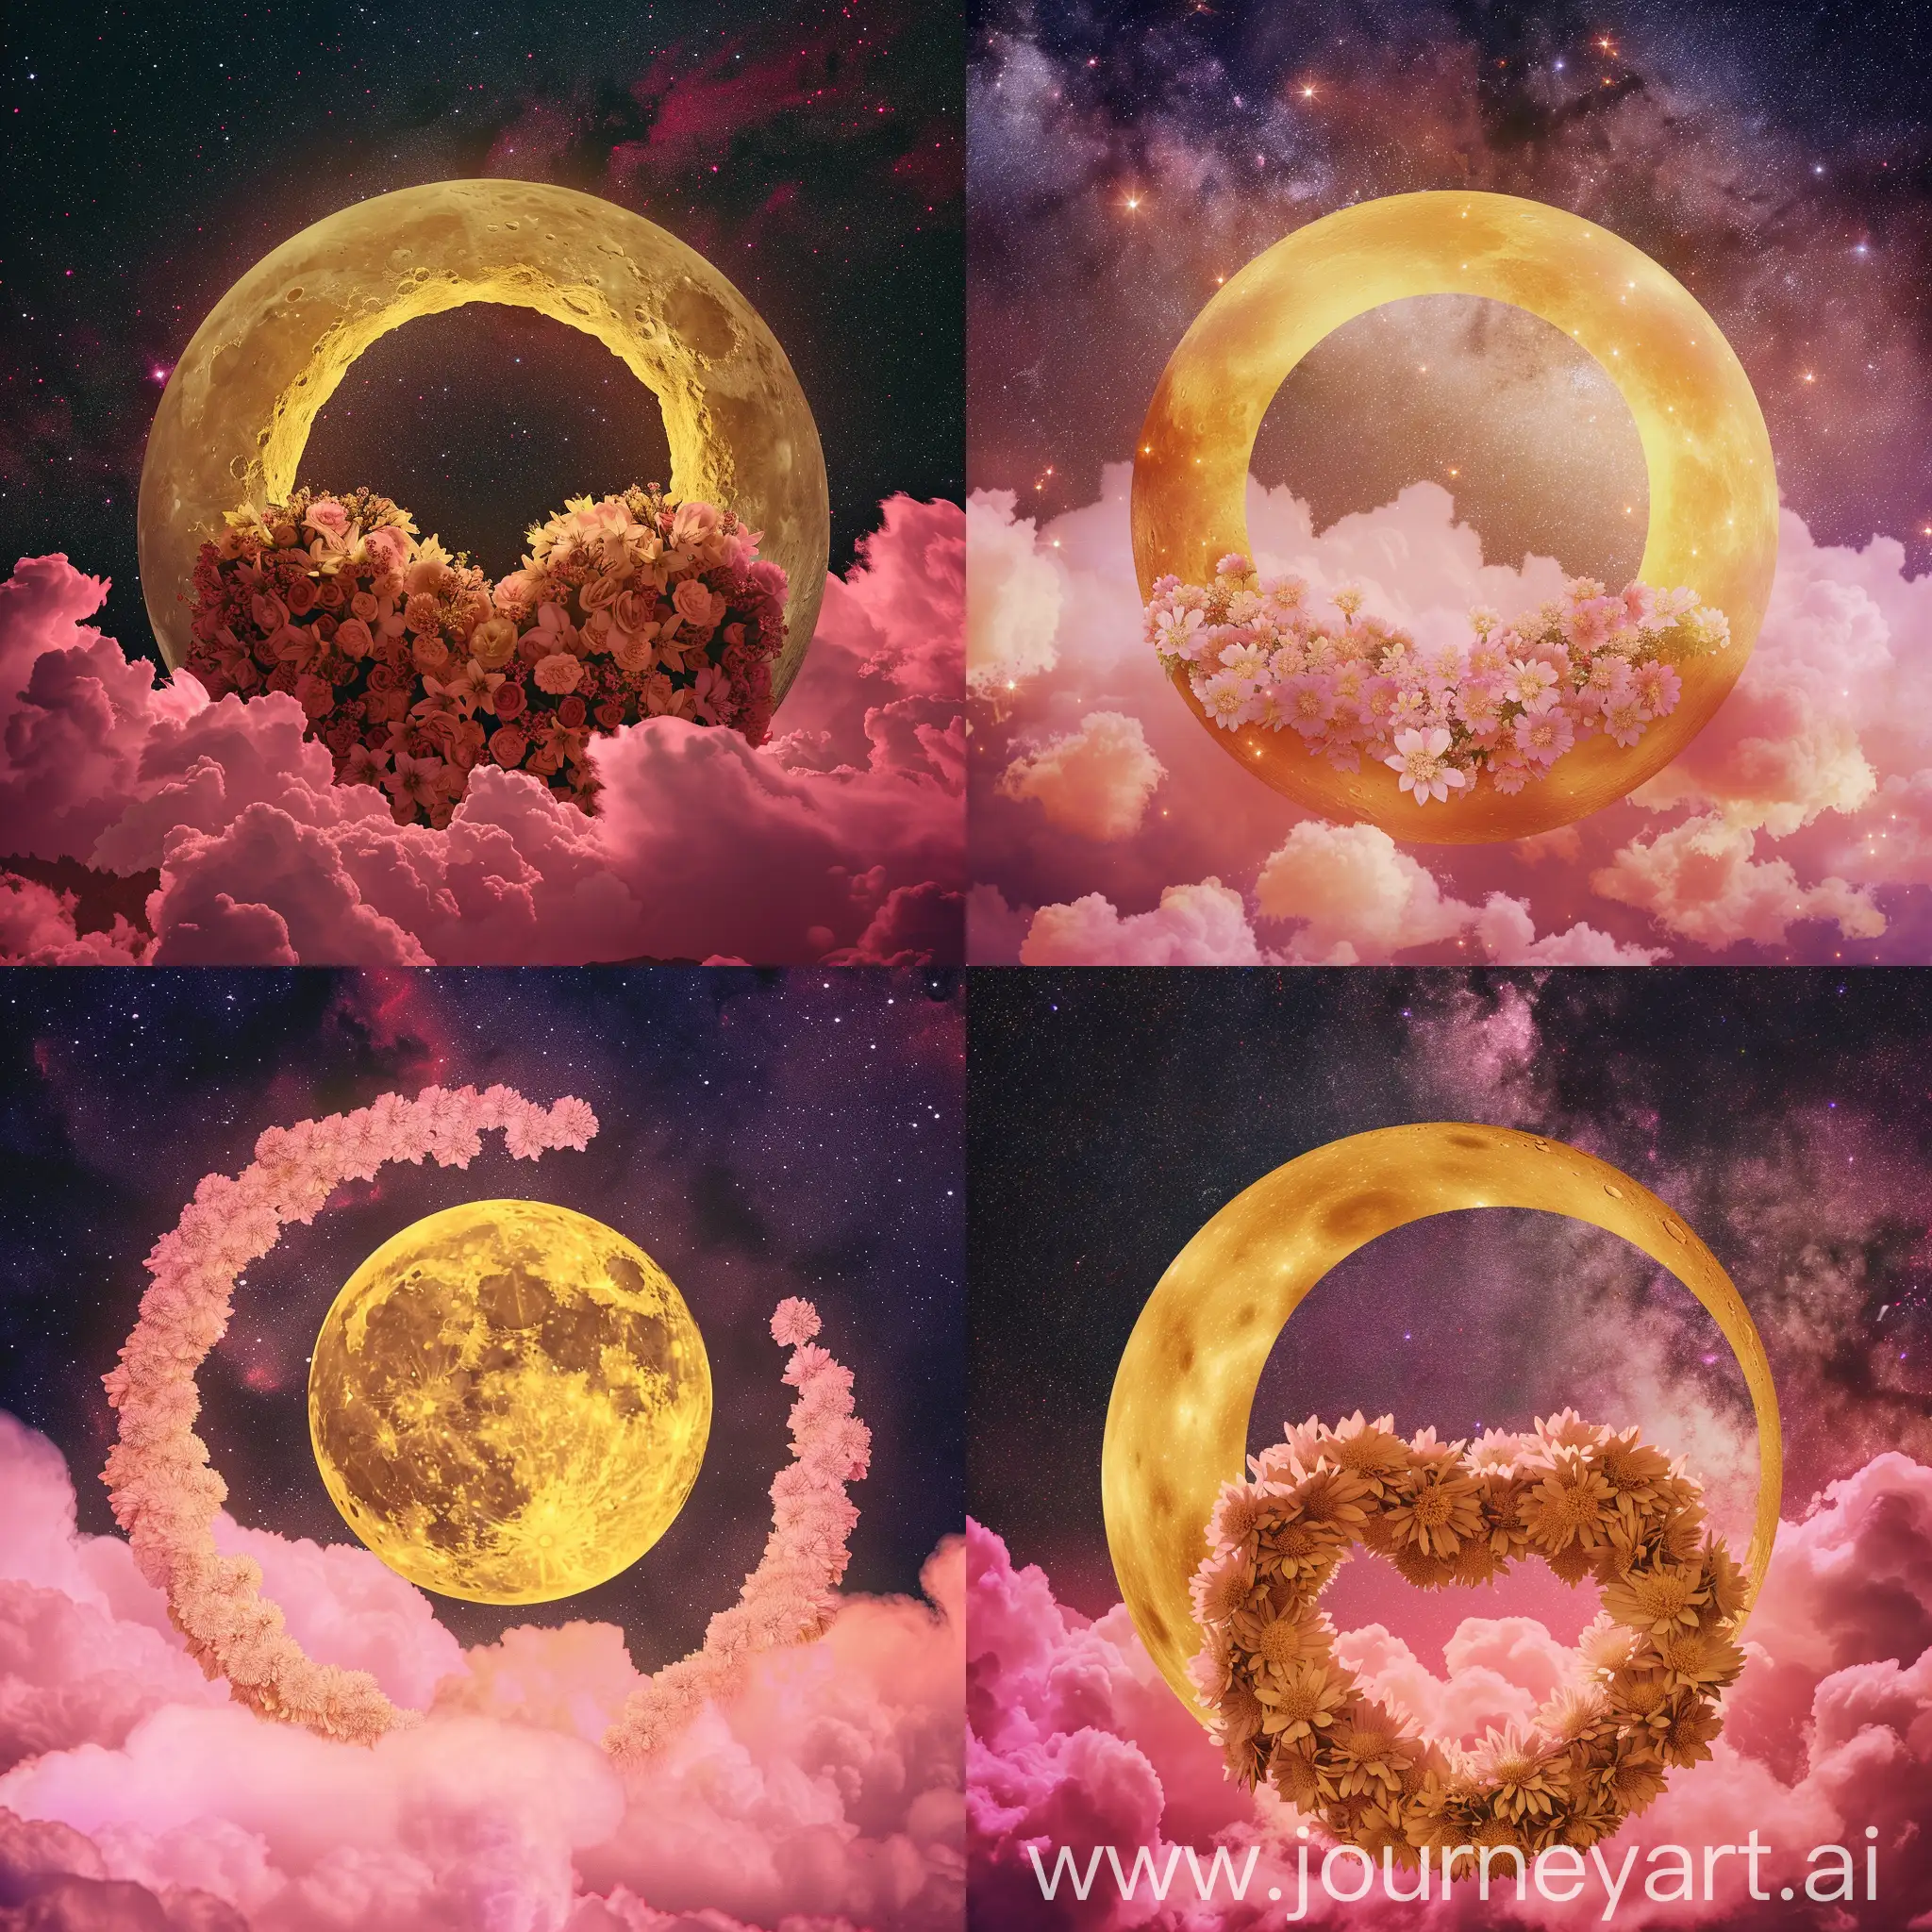 Pink-HeartShaped-Flower-Wreath-under-Yellow-Moonlight-in-Starry-Cosmos